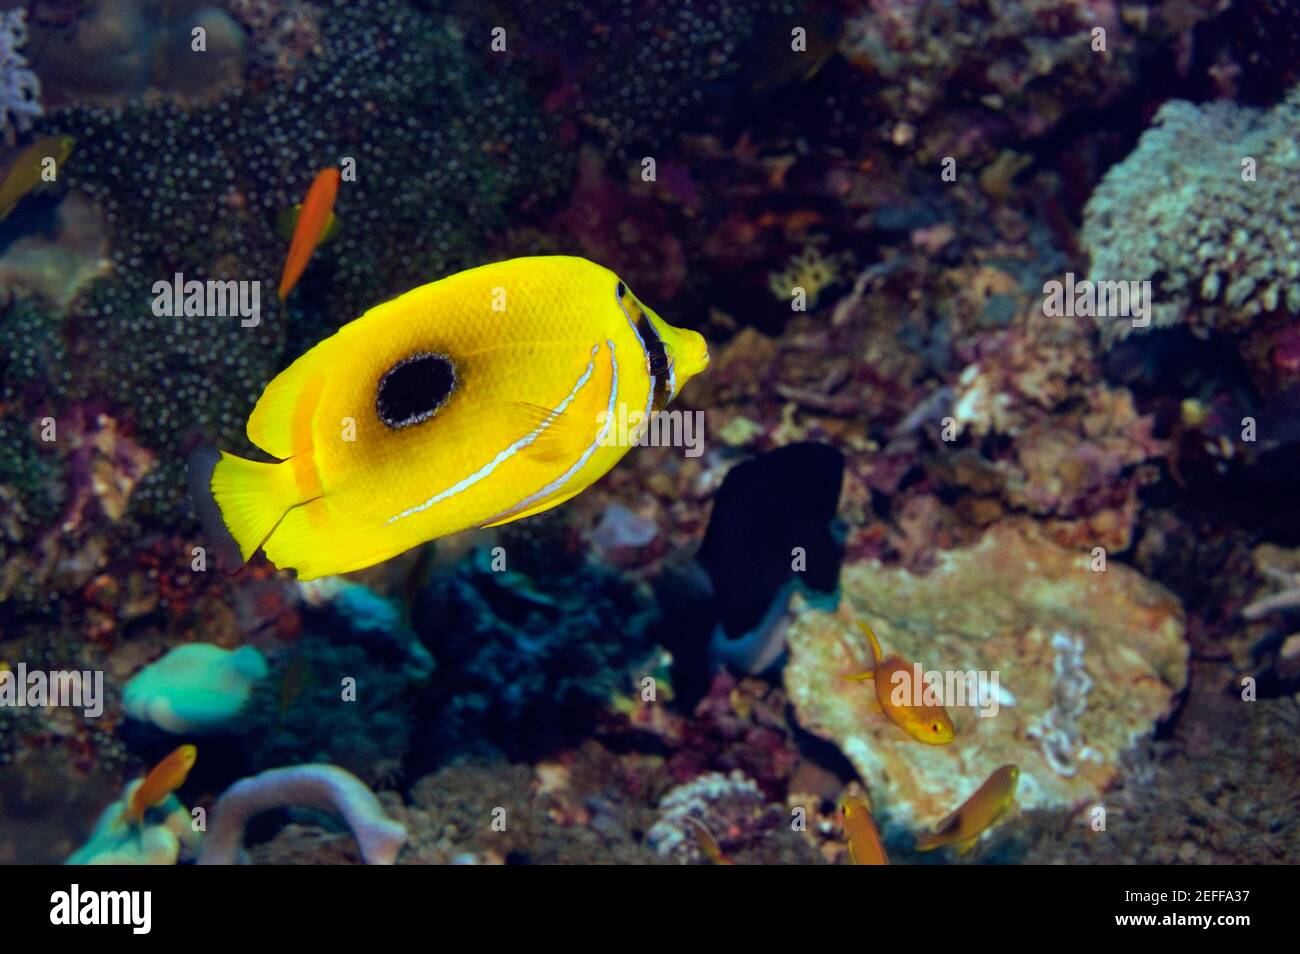 Eclipse butterflyfish swimming underwater, North Sulawesi, Sulawesi, Indonesia Stock Photo